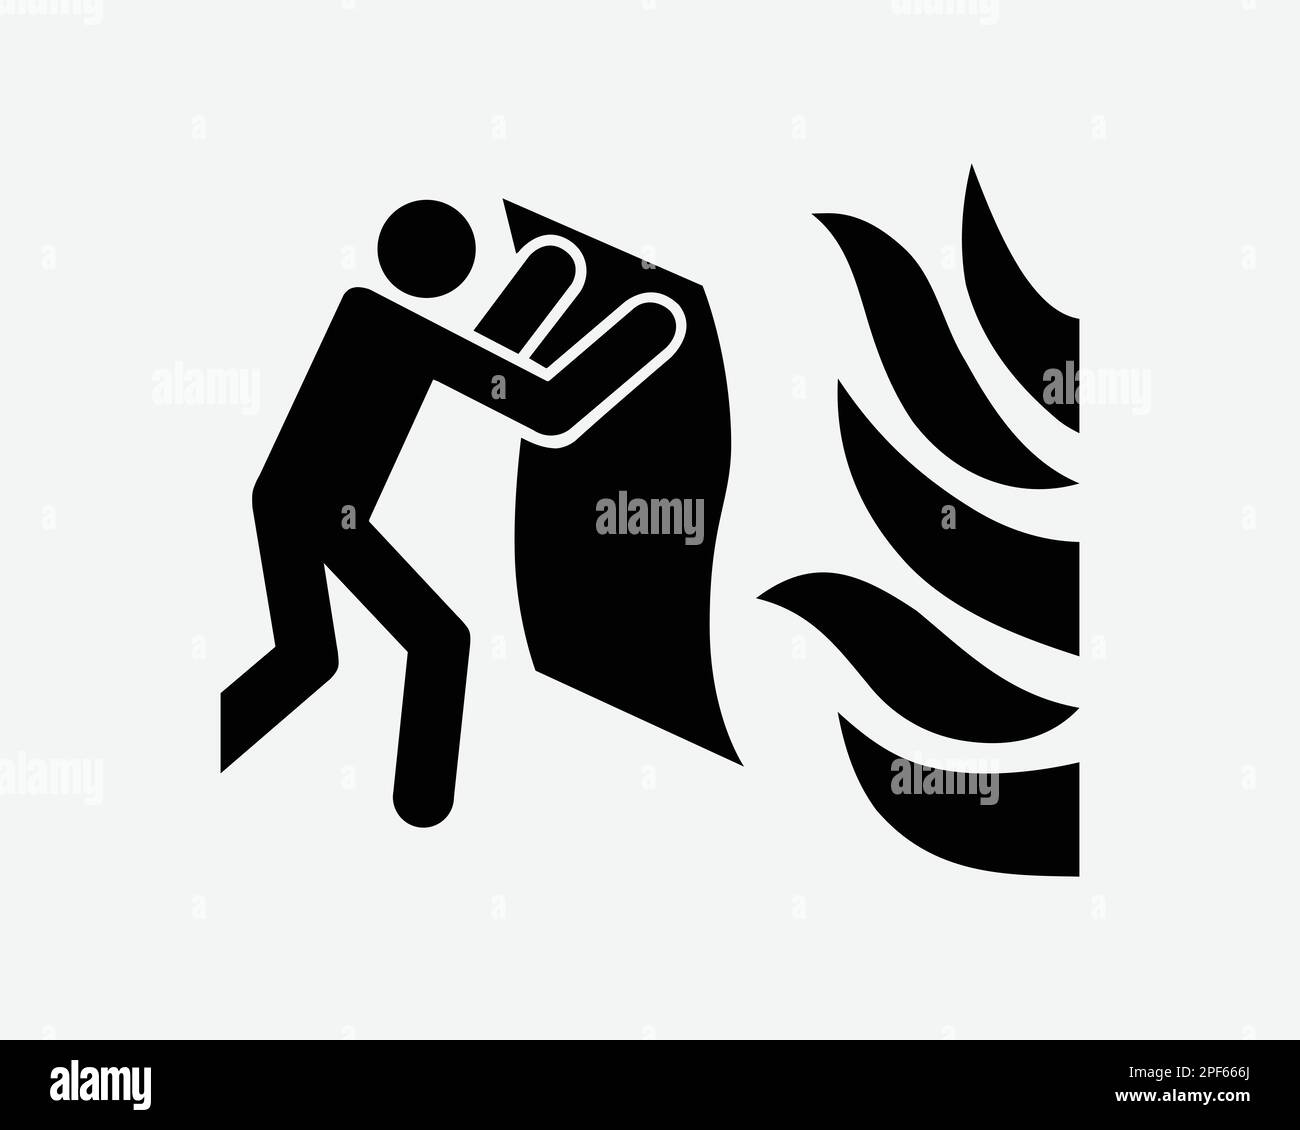 Feuerlöschgerät Person, Die Flammen Auslöst Schwarz Weiß Silhouette Symbol Symbol Clipart Grafik Bildmaterial Piktogramm Illustration Vektor Stock Vektor